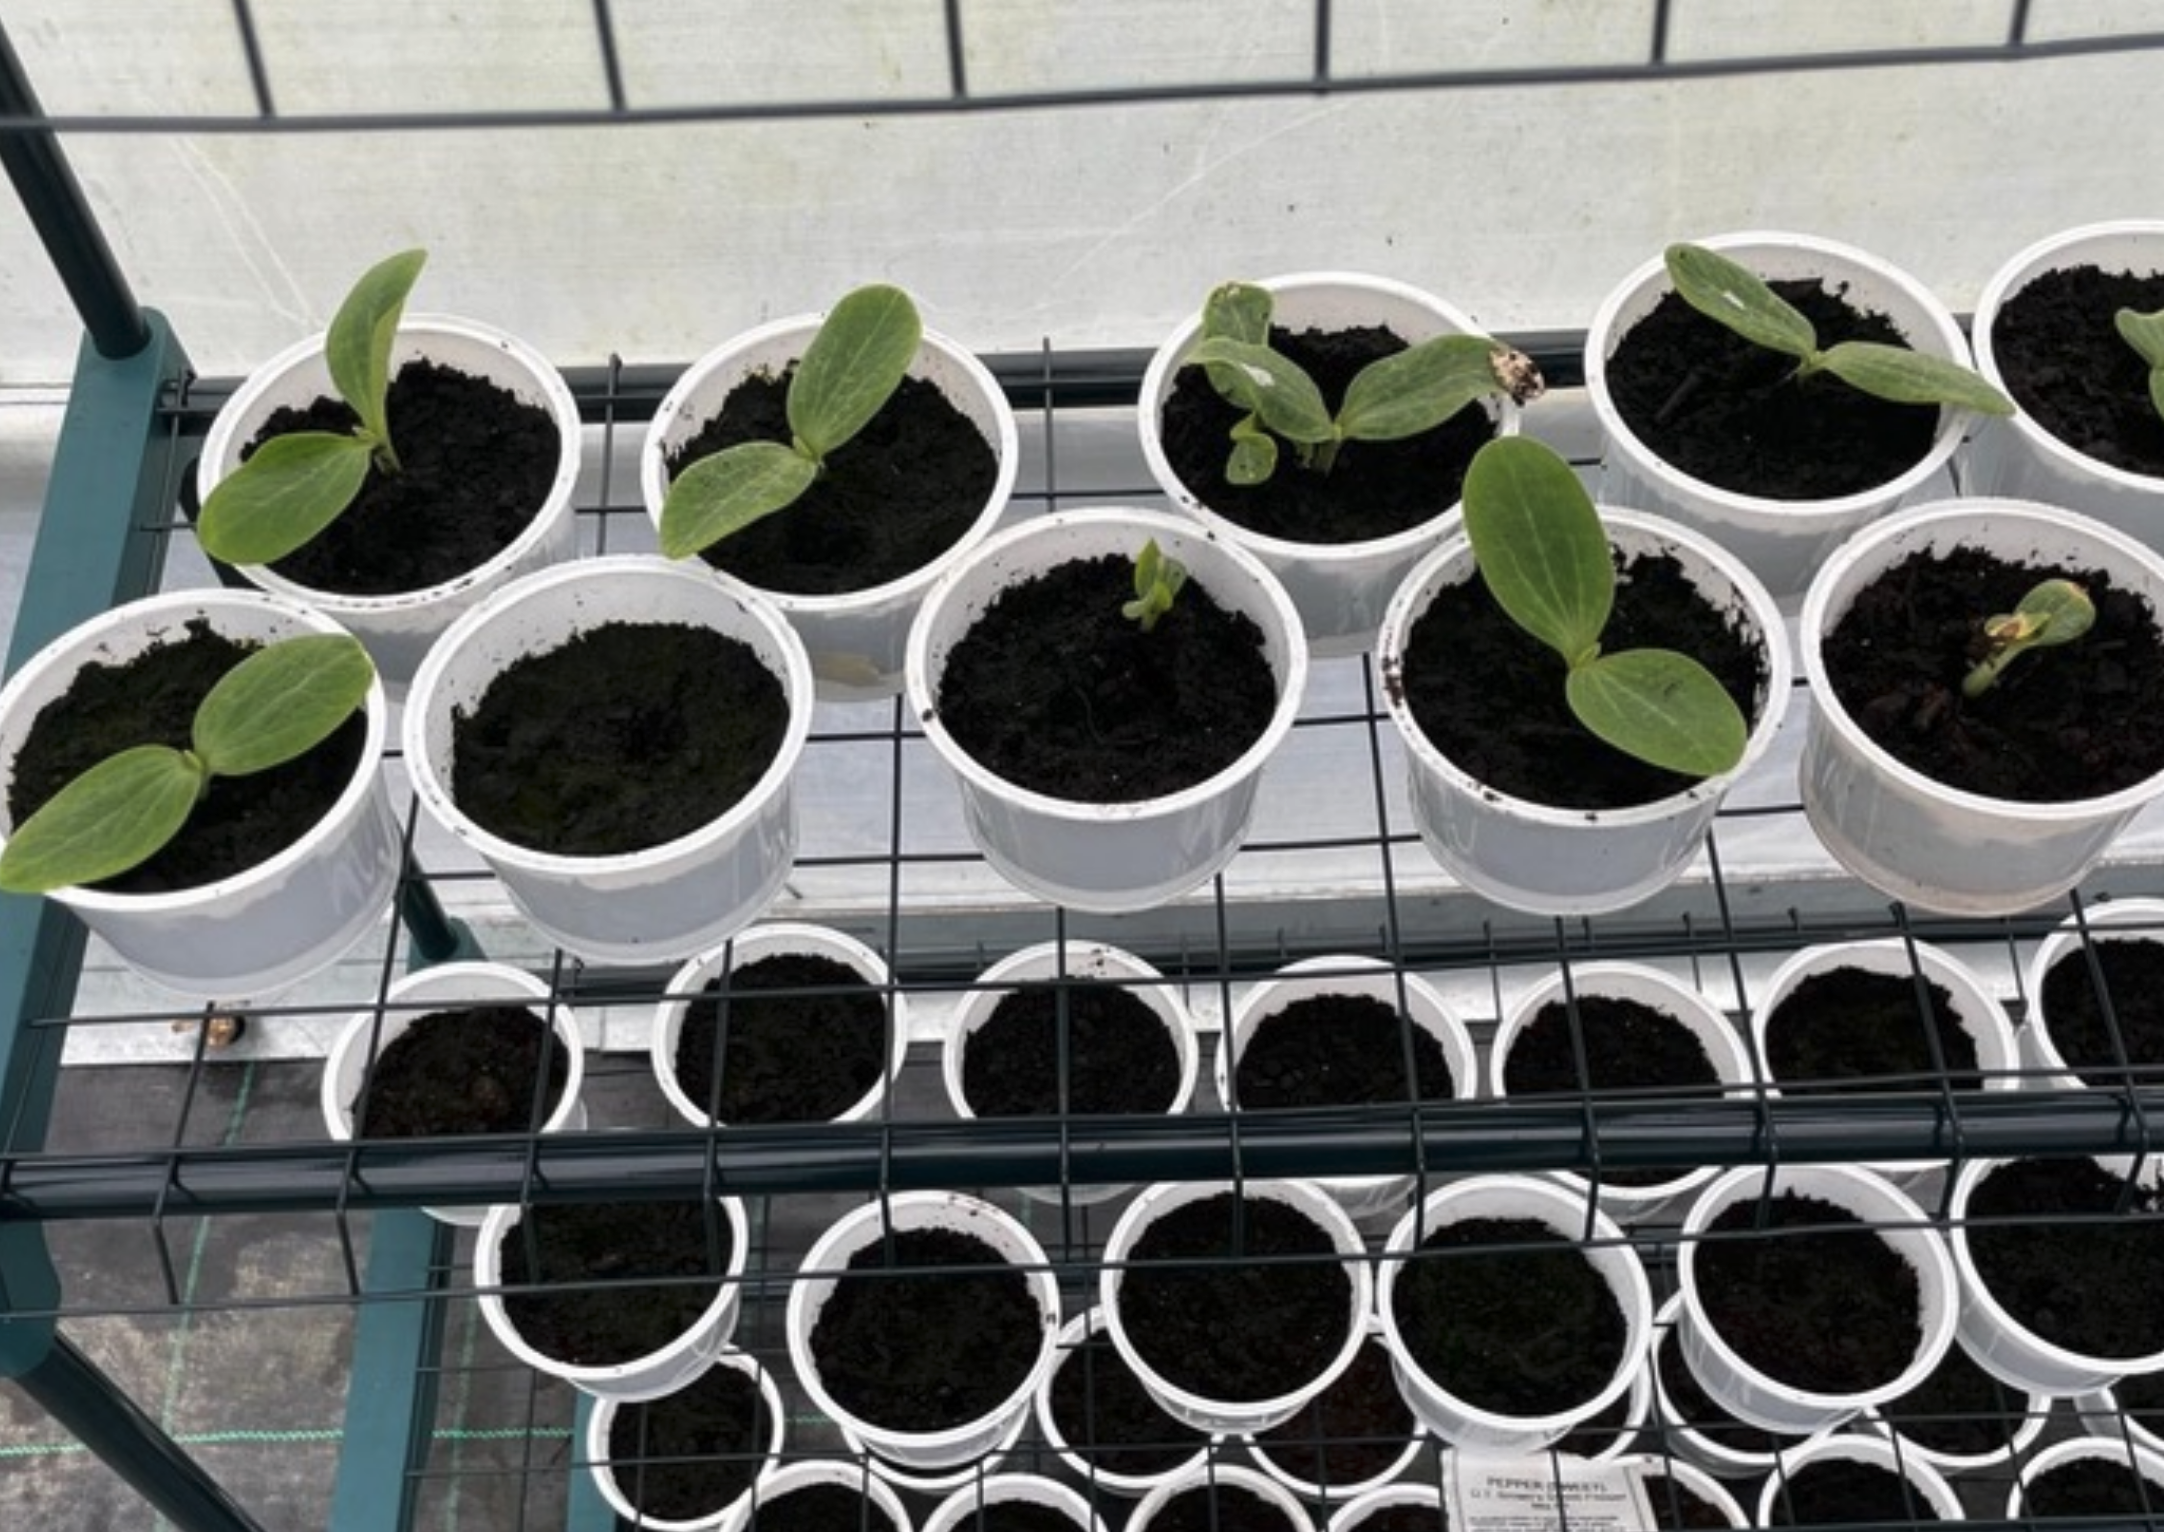 A grow box of seedlings